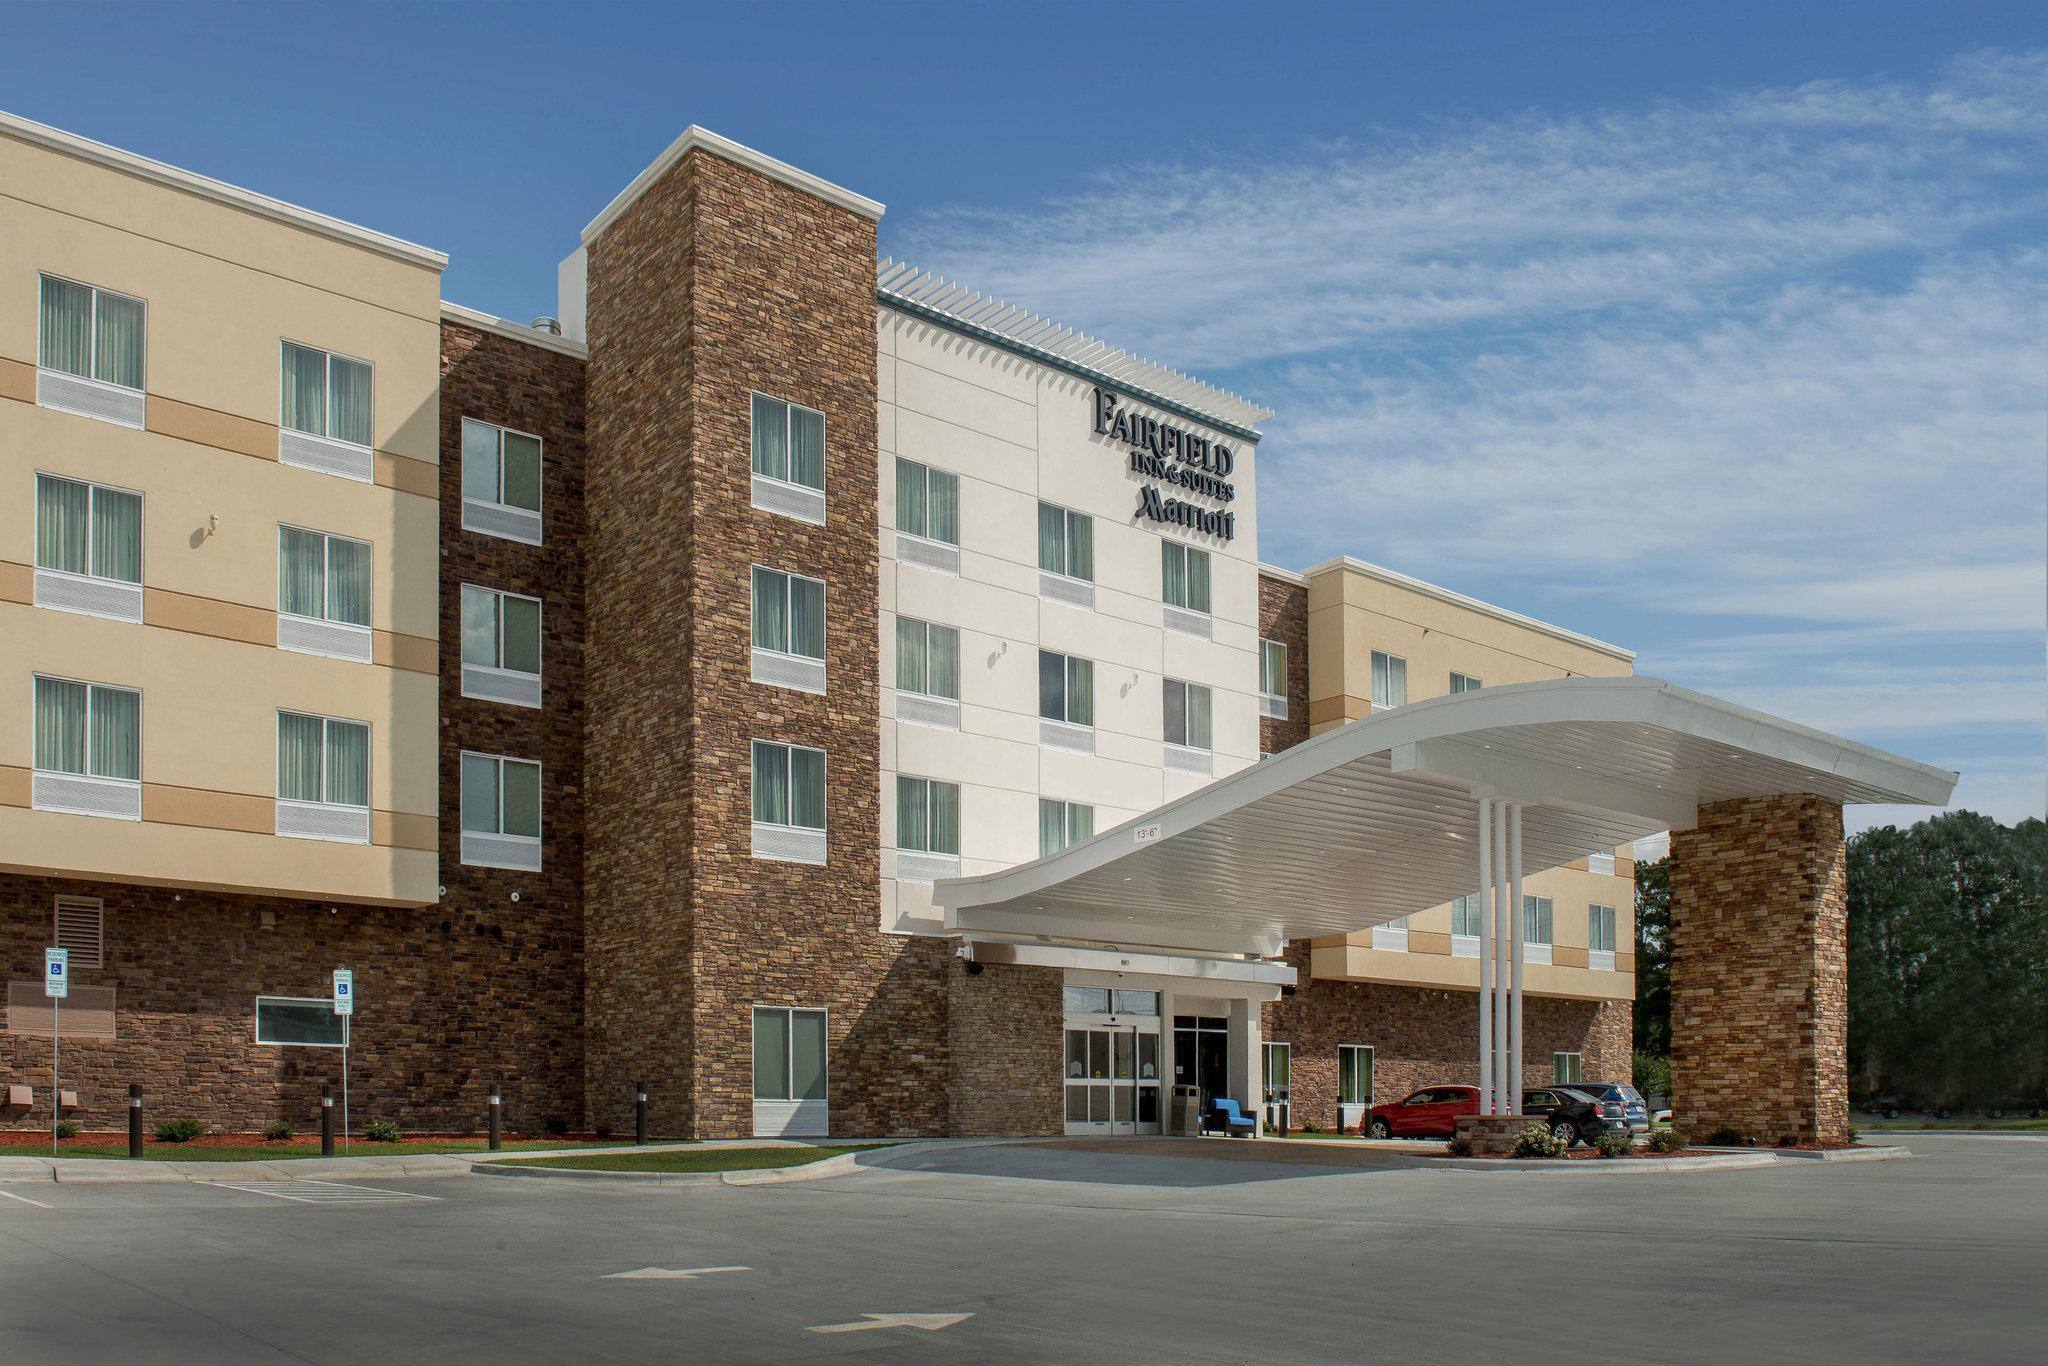 Fairfield Inn & Suites Washington - Washington, NC